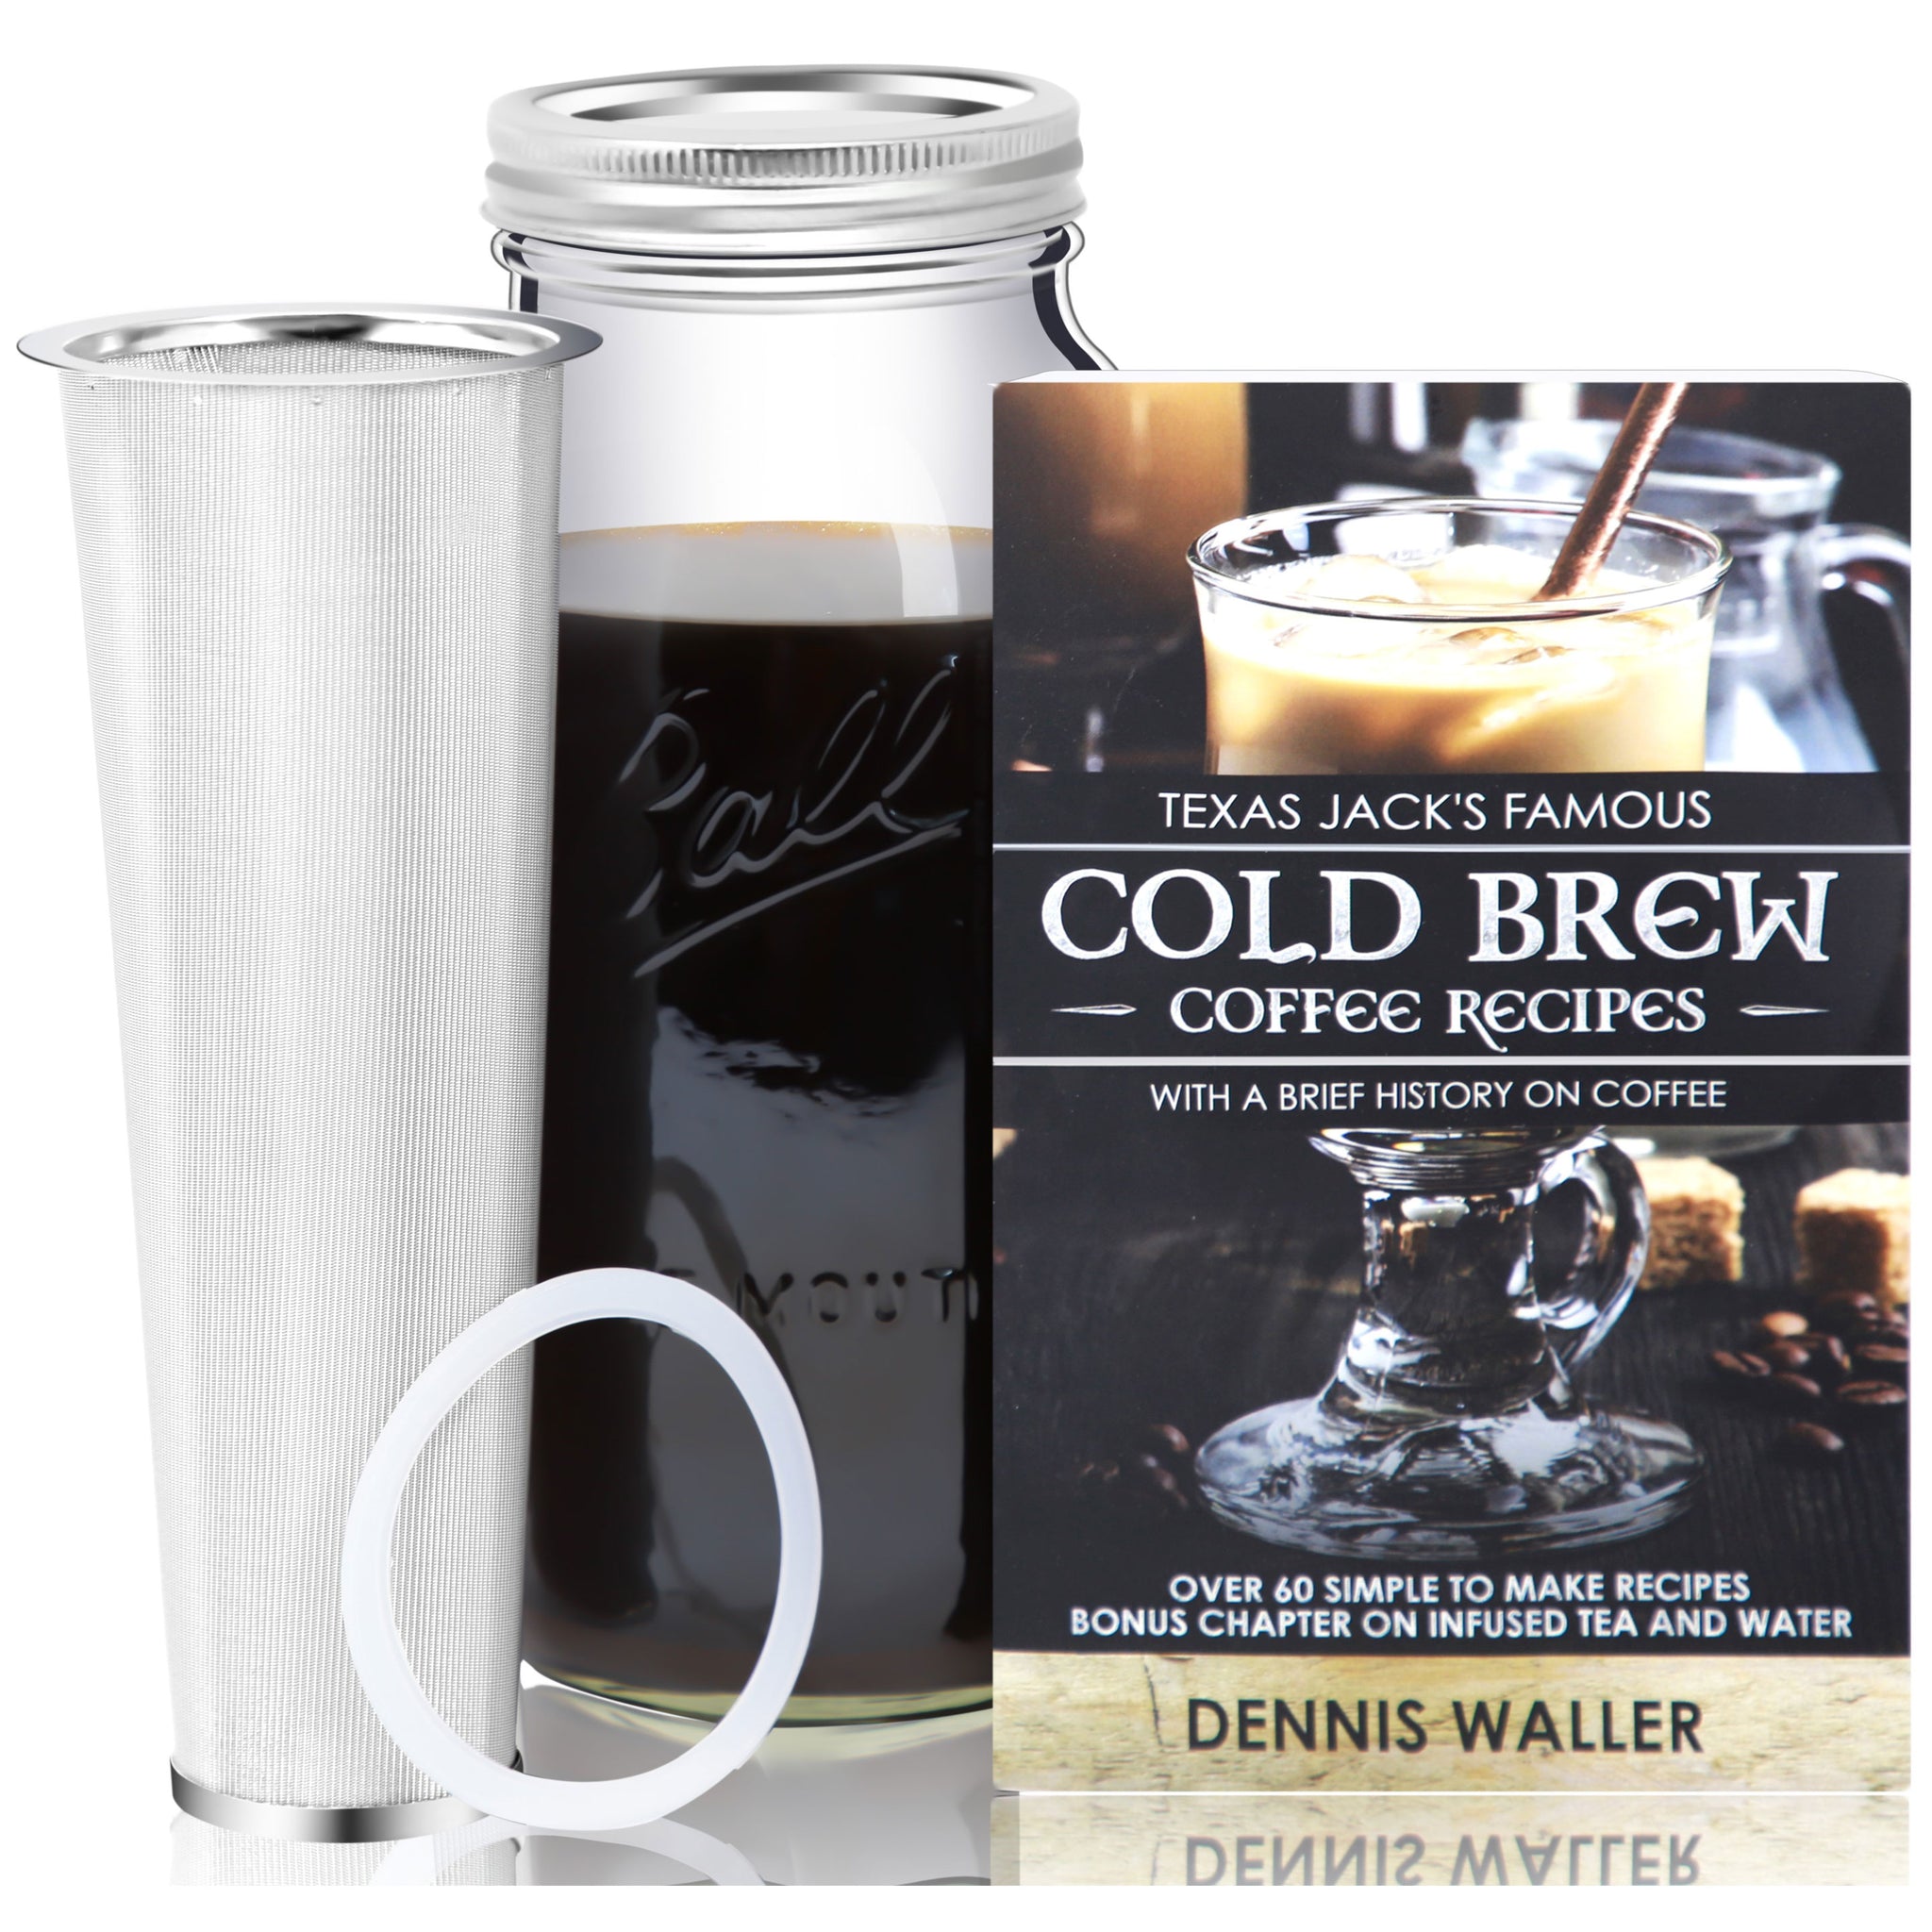 Craft Cold Brew Kit